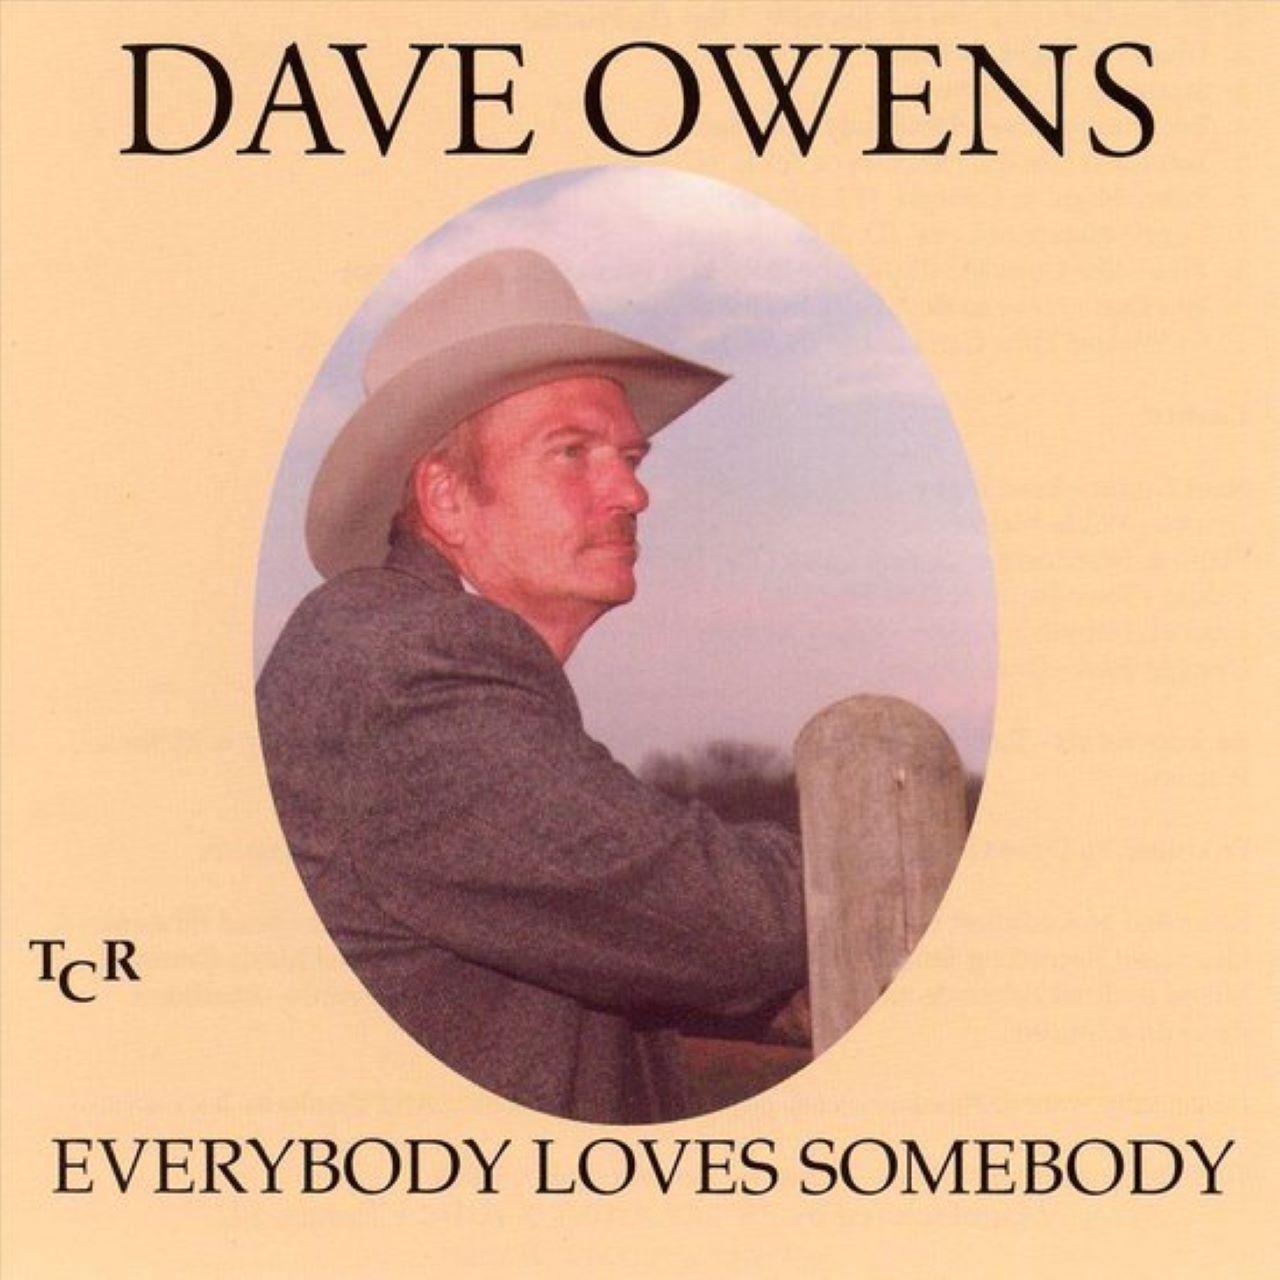 Dave Owens - Everybody Loves Somebody cover album